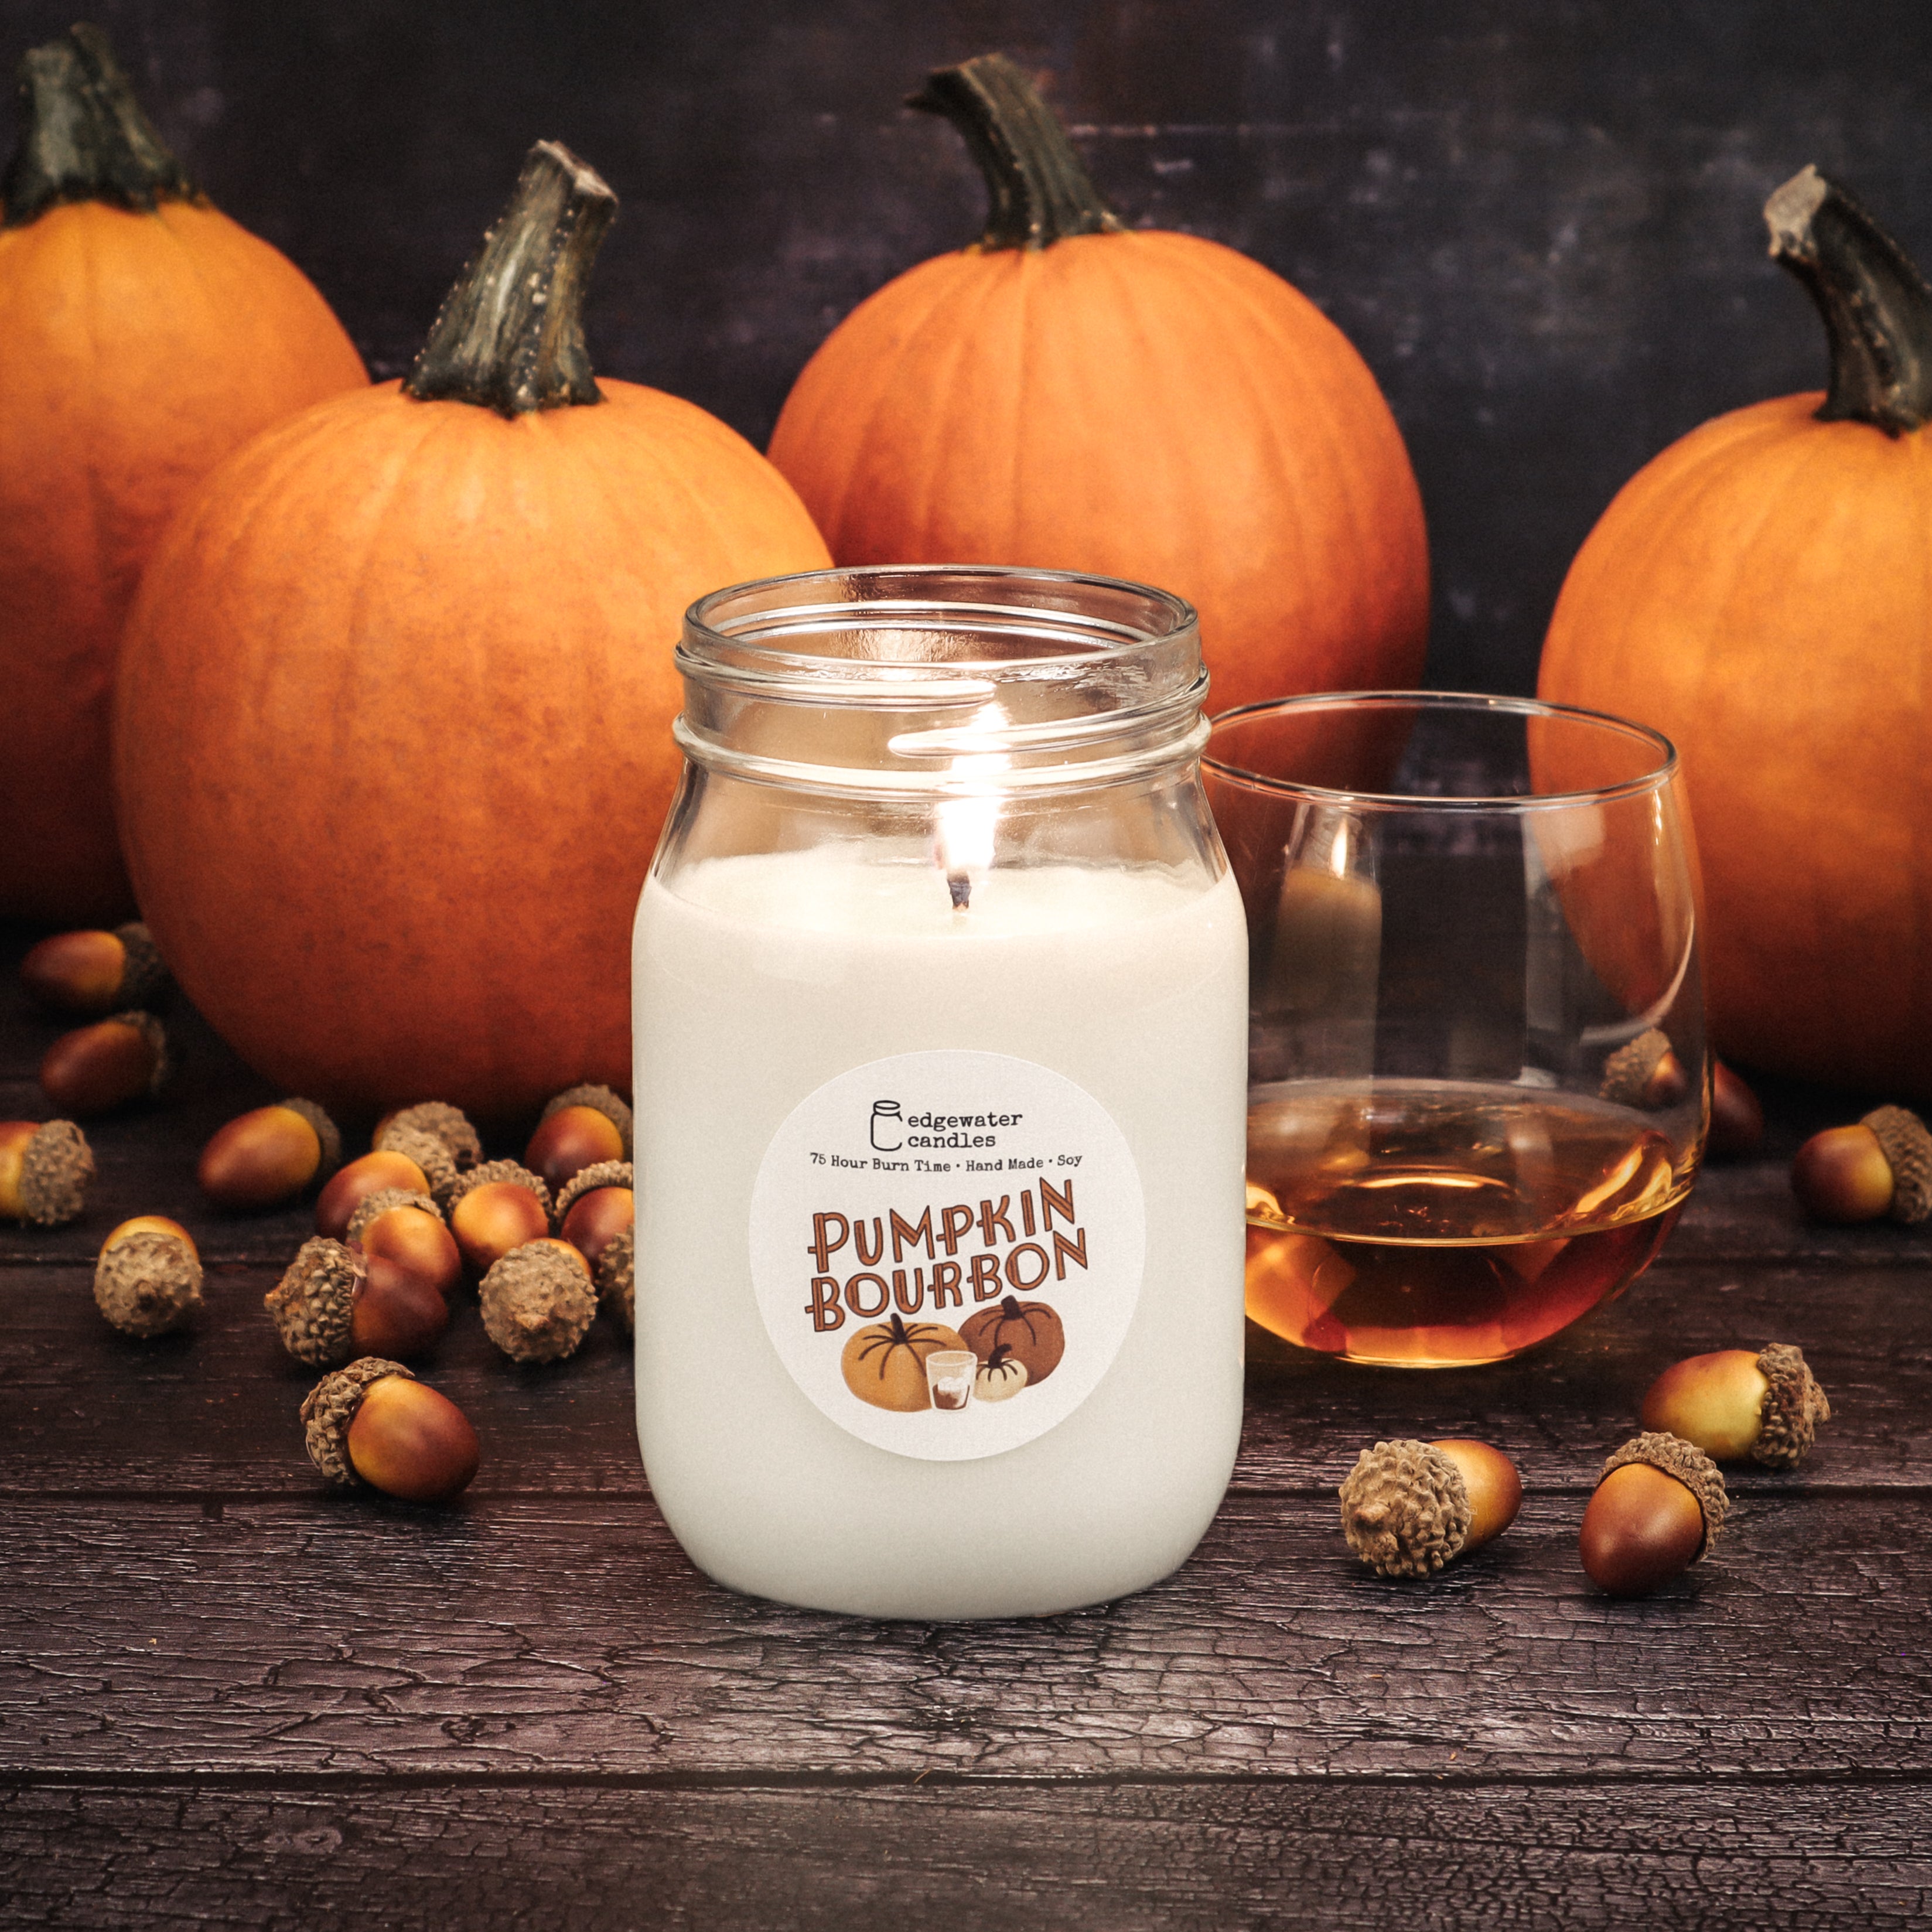 What does Pumpkin Bourbon smell like?